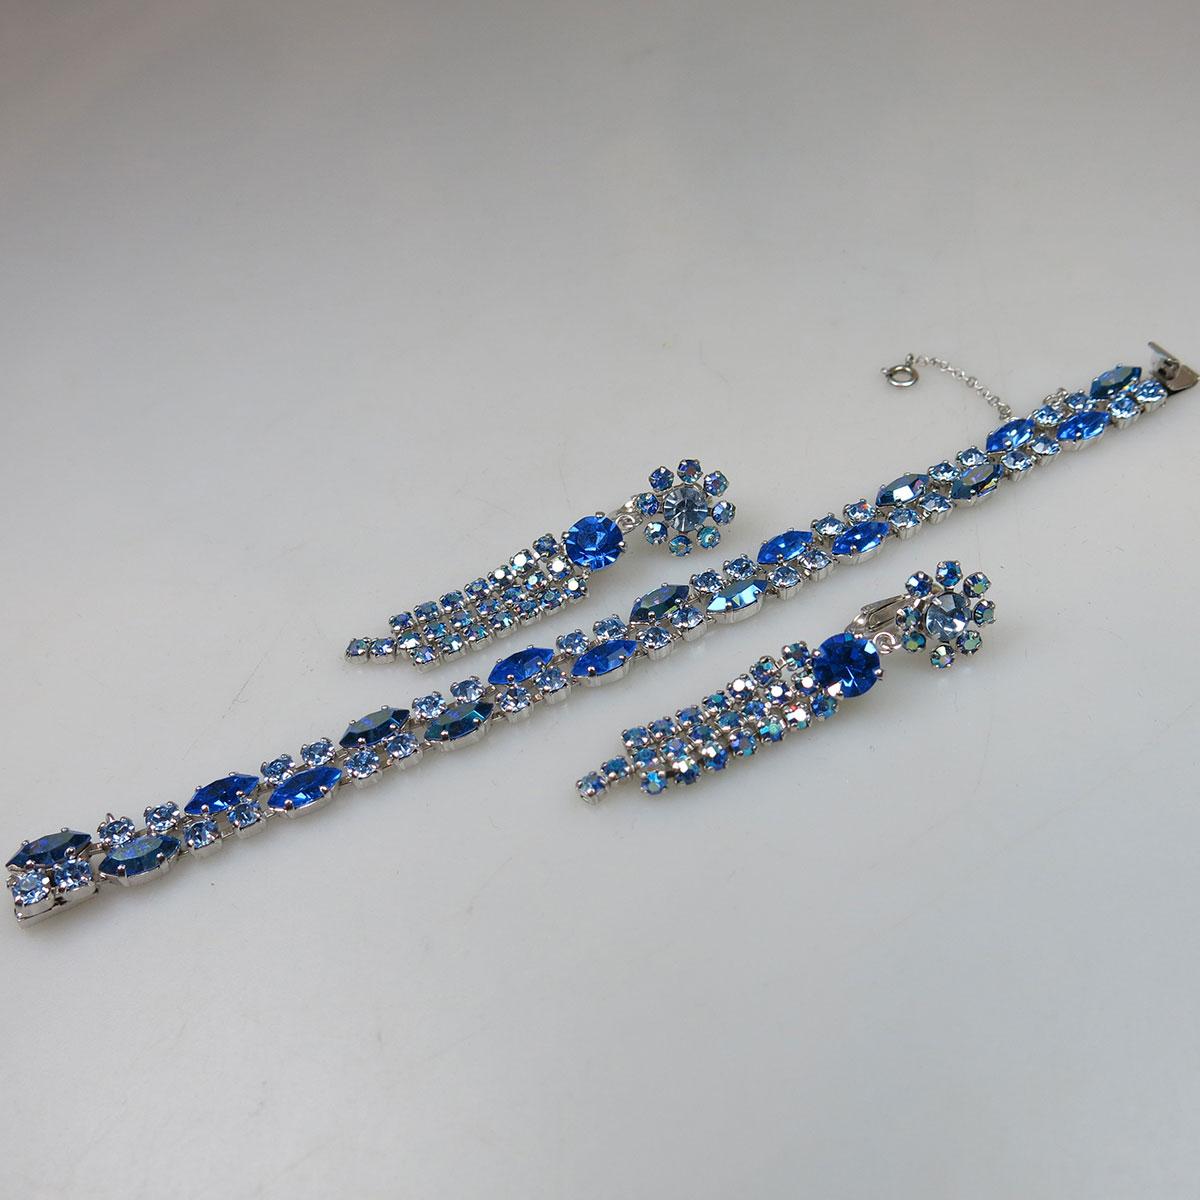 Sherman Silver Tone Metal Strap Bracelet And Earrings set with blue rhinestones